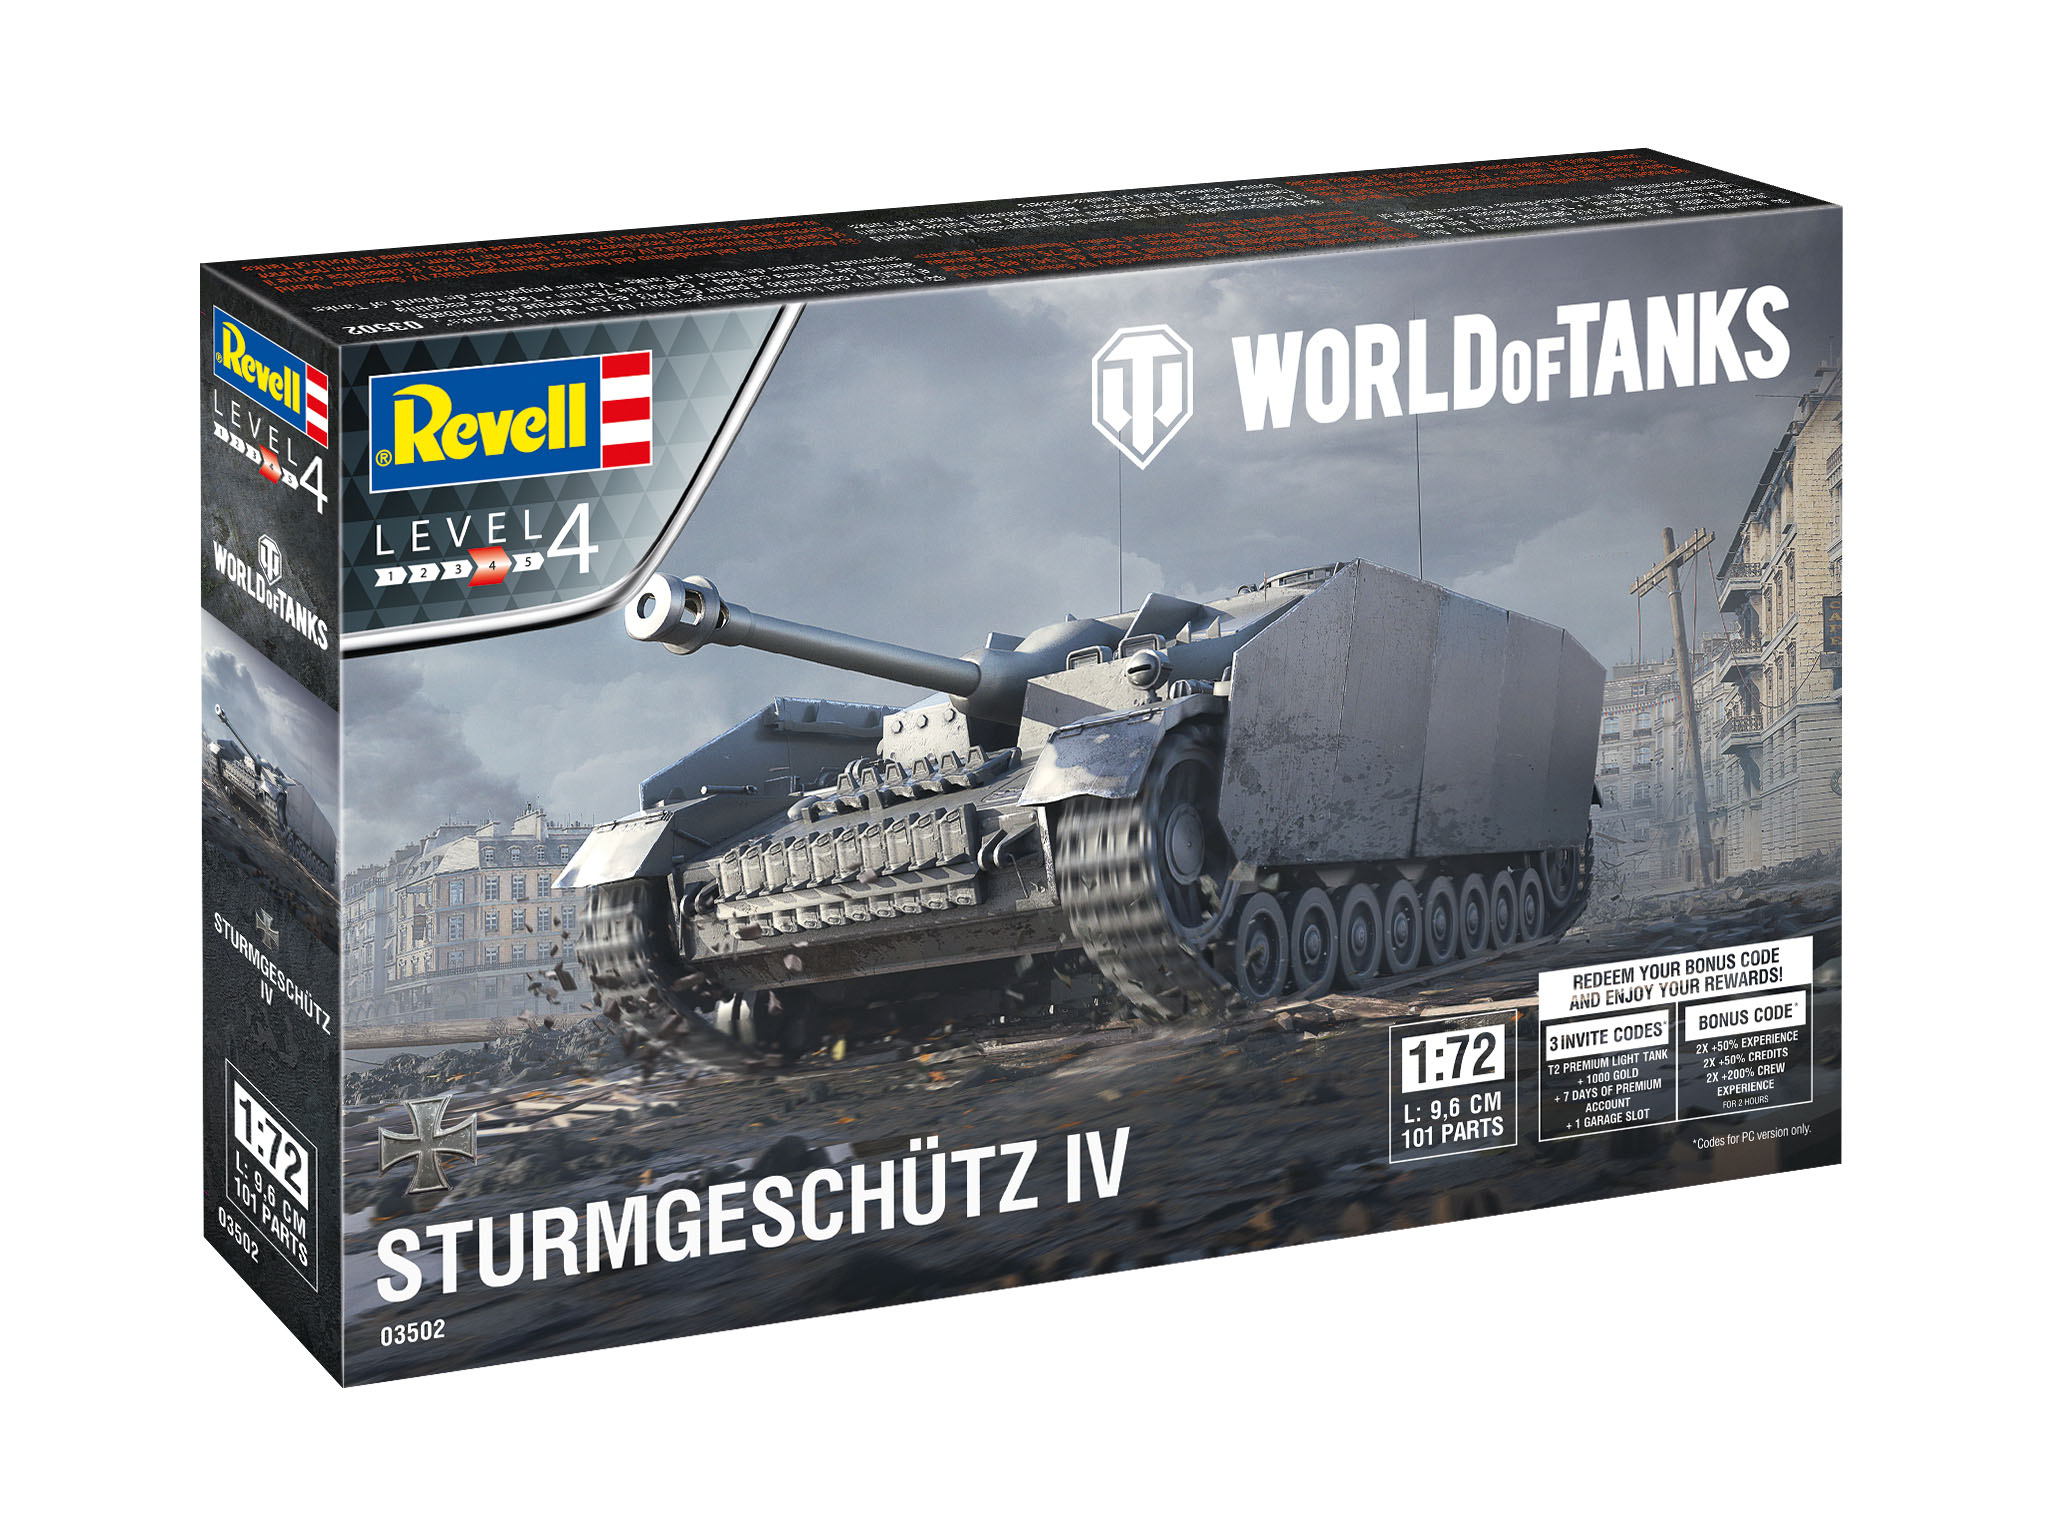 Sturmgeschütz IV "World of Ta - Sturmgeschütz IV World of Tanks